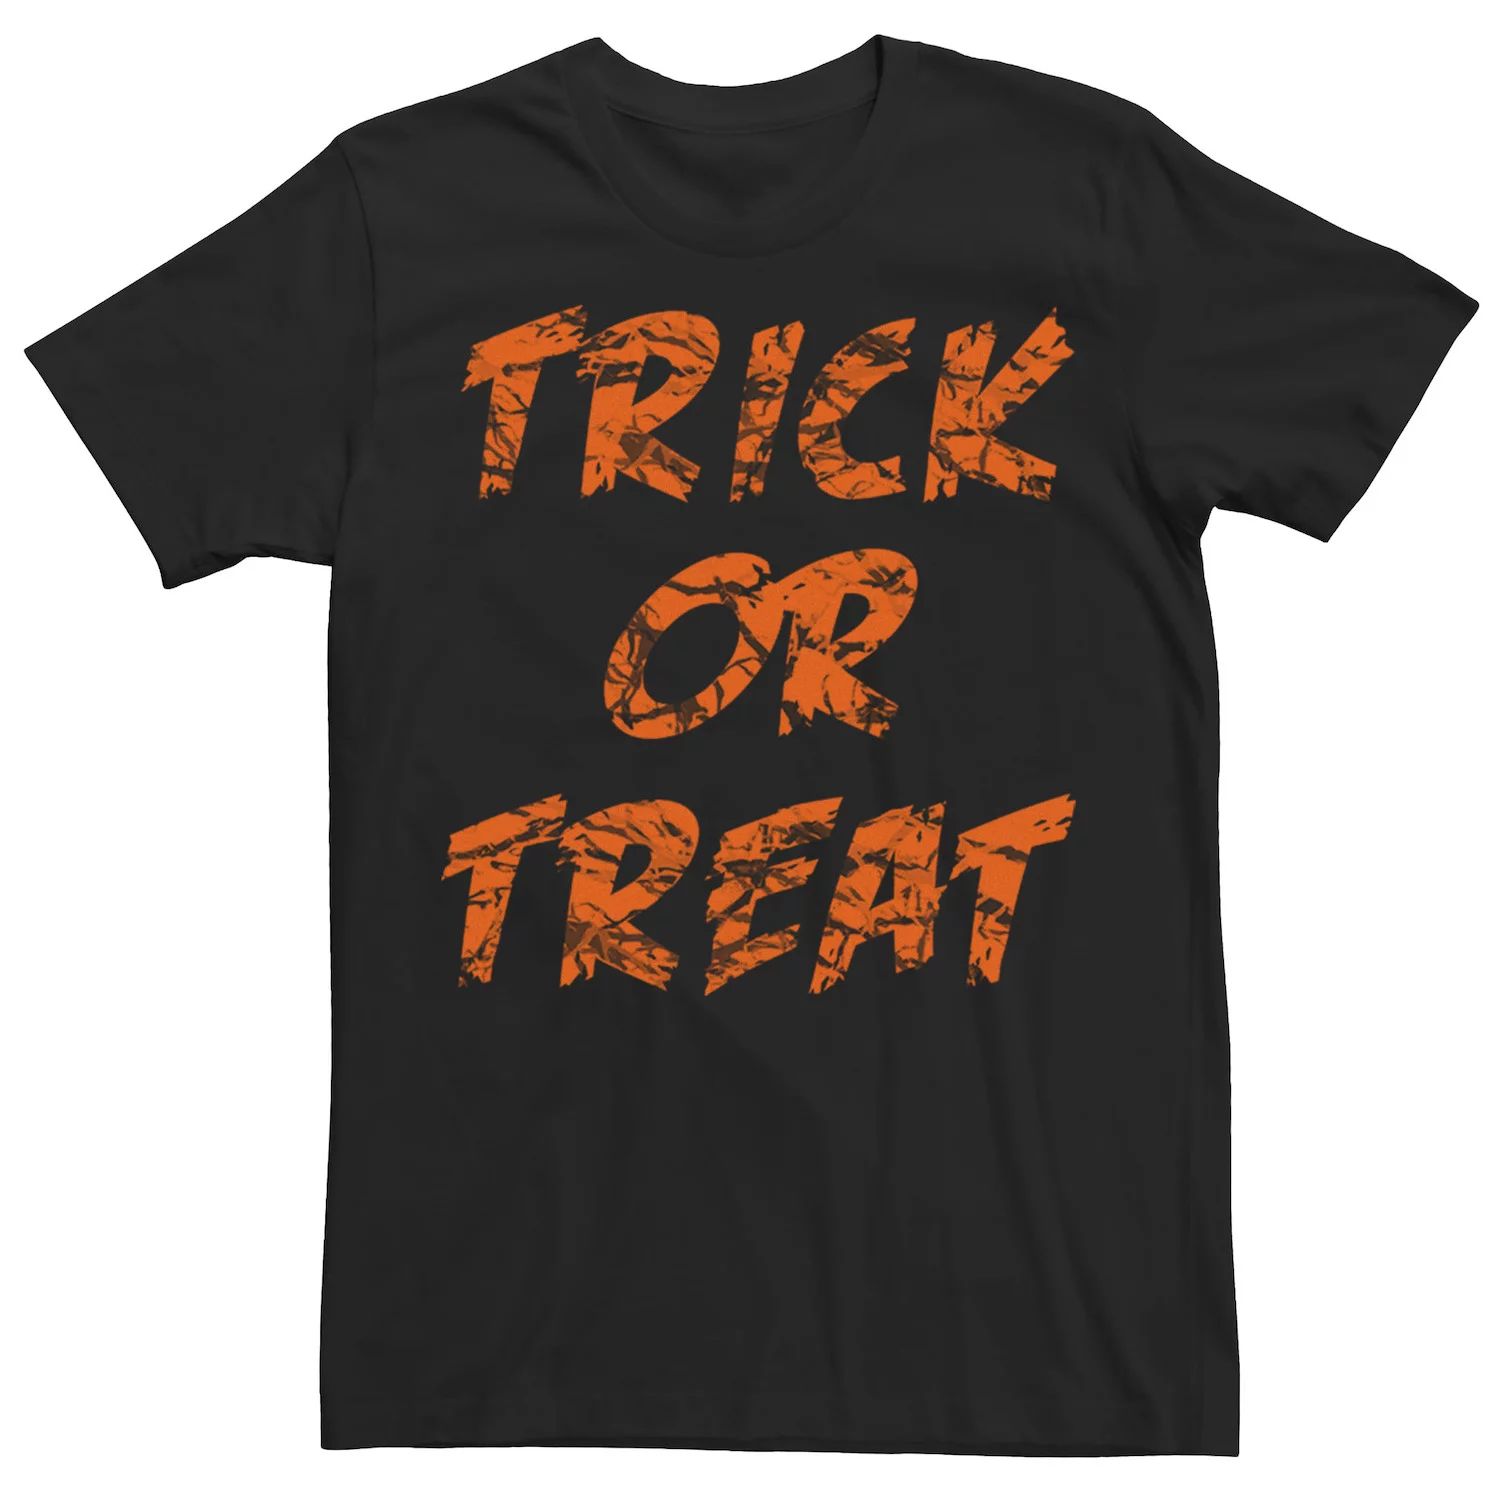 Мужская футболка с надписью Trick Or Treat Licensed Character мужская футболка с надписью trick or treat licensed character